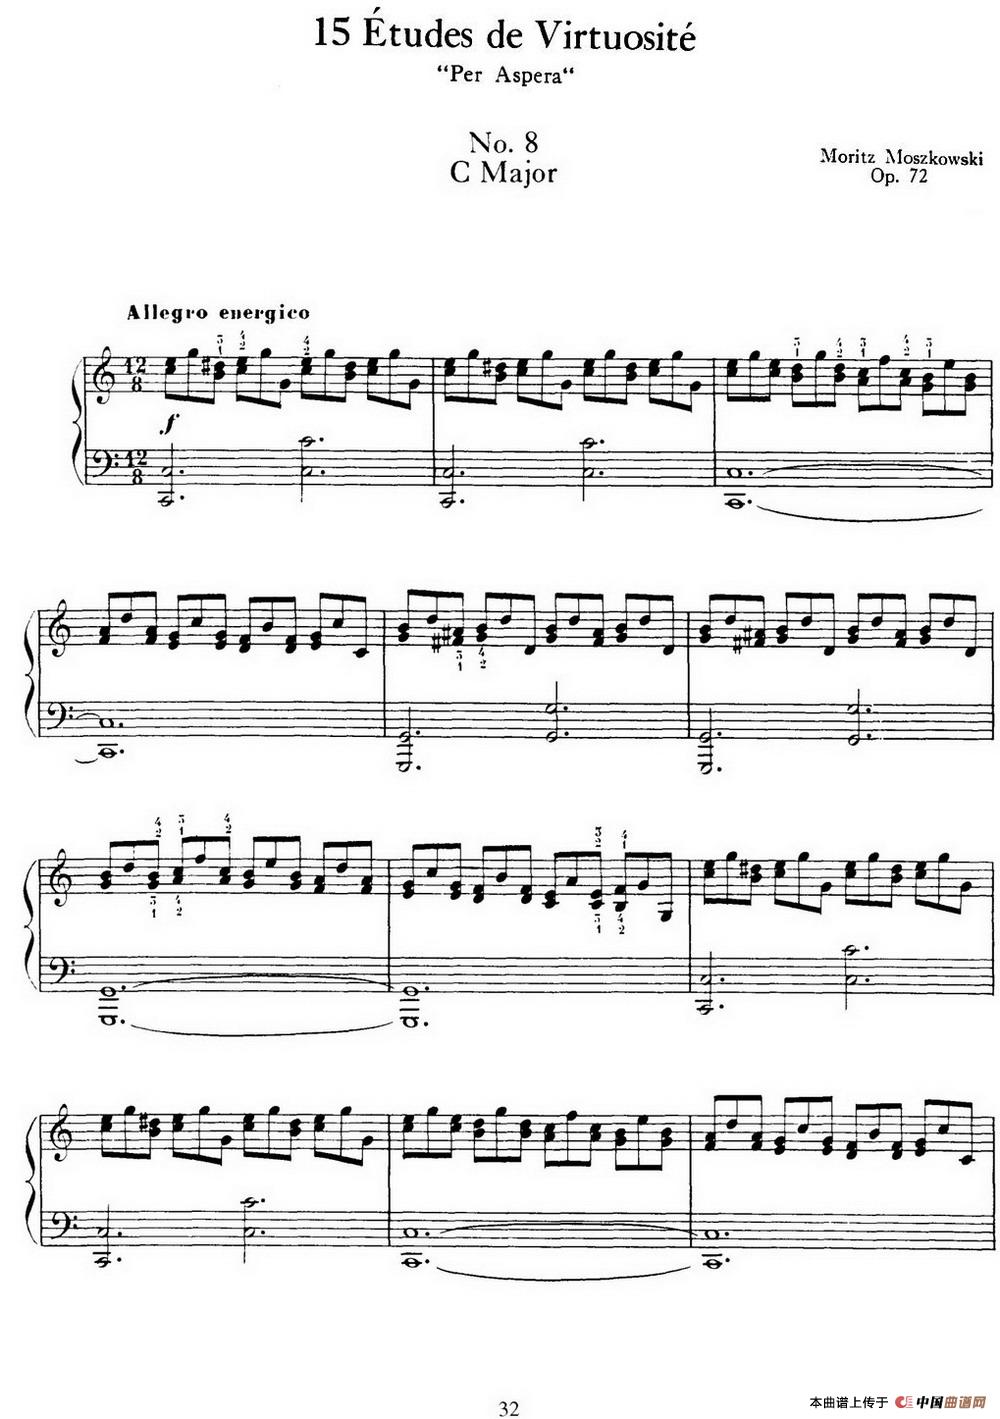 15 Etudes de Virtuosité Op.72 No.8（十五首钢琴练习曲之八）(1)_032=.jpg